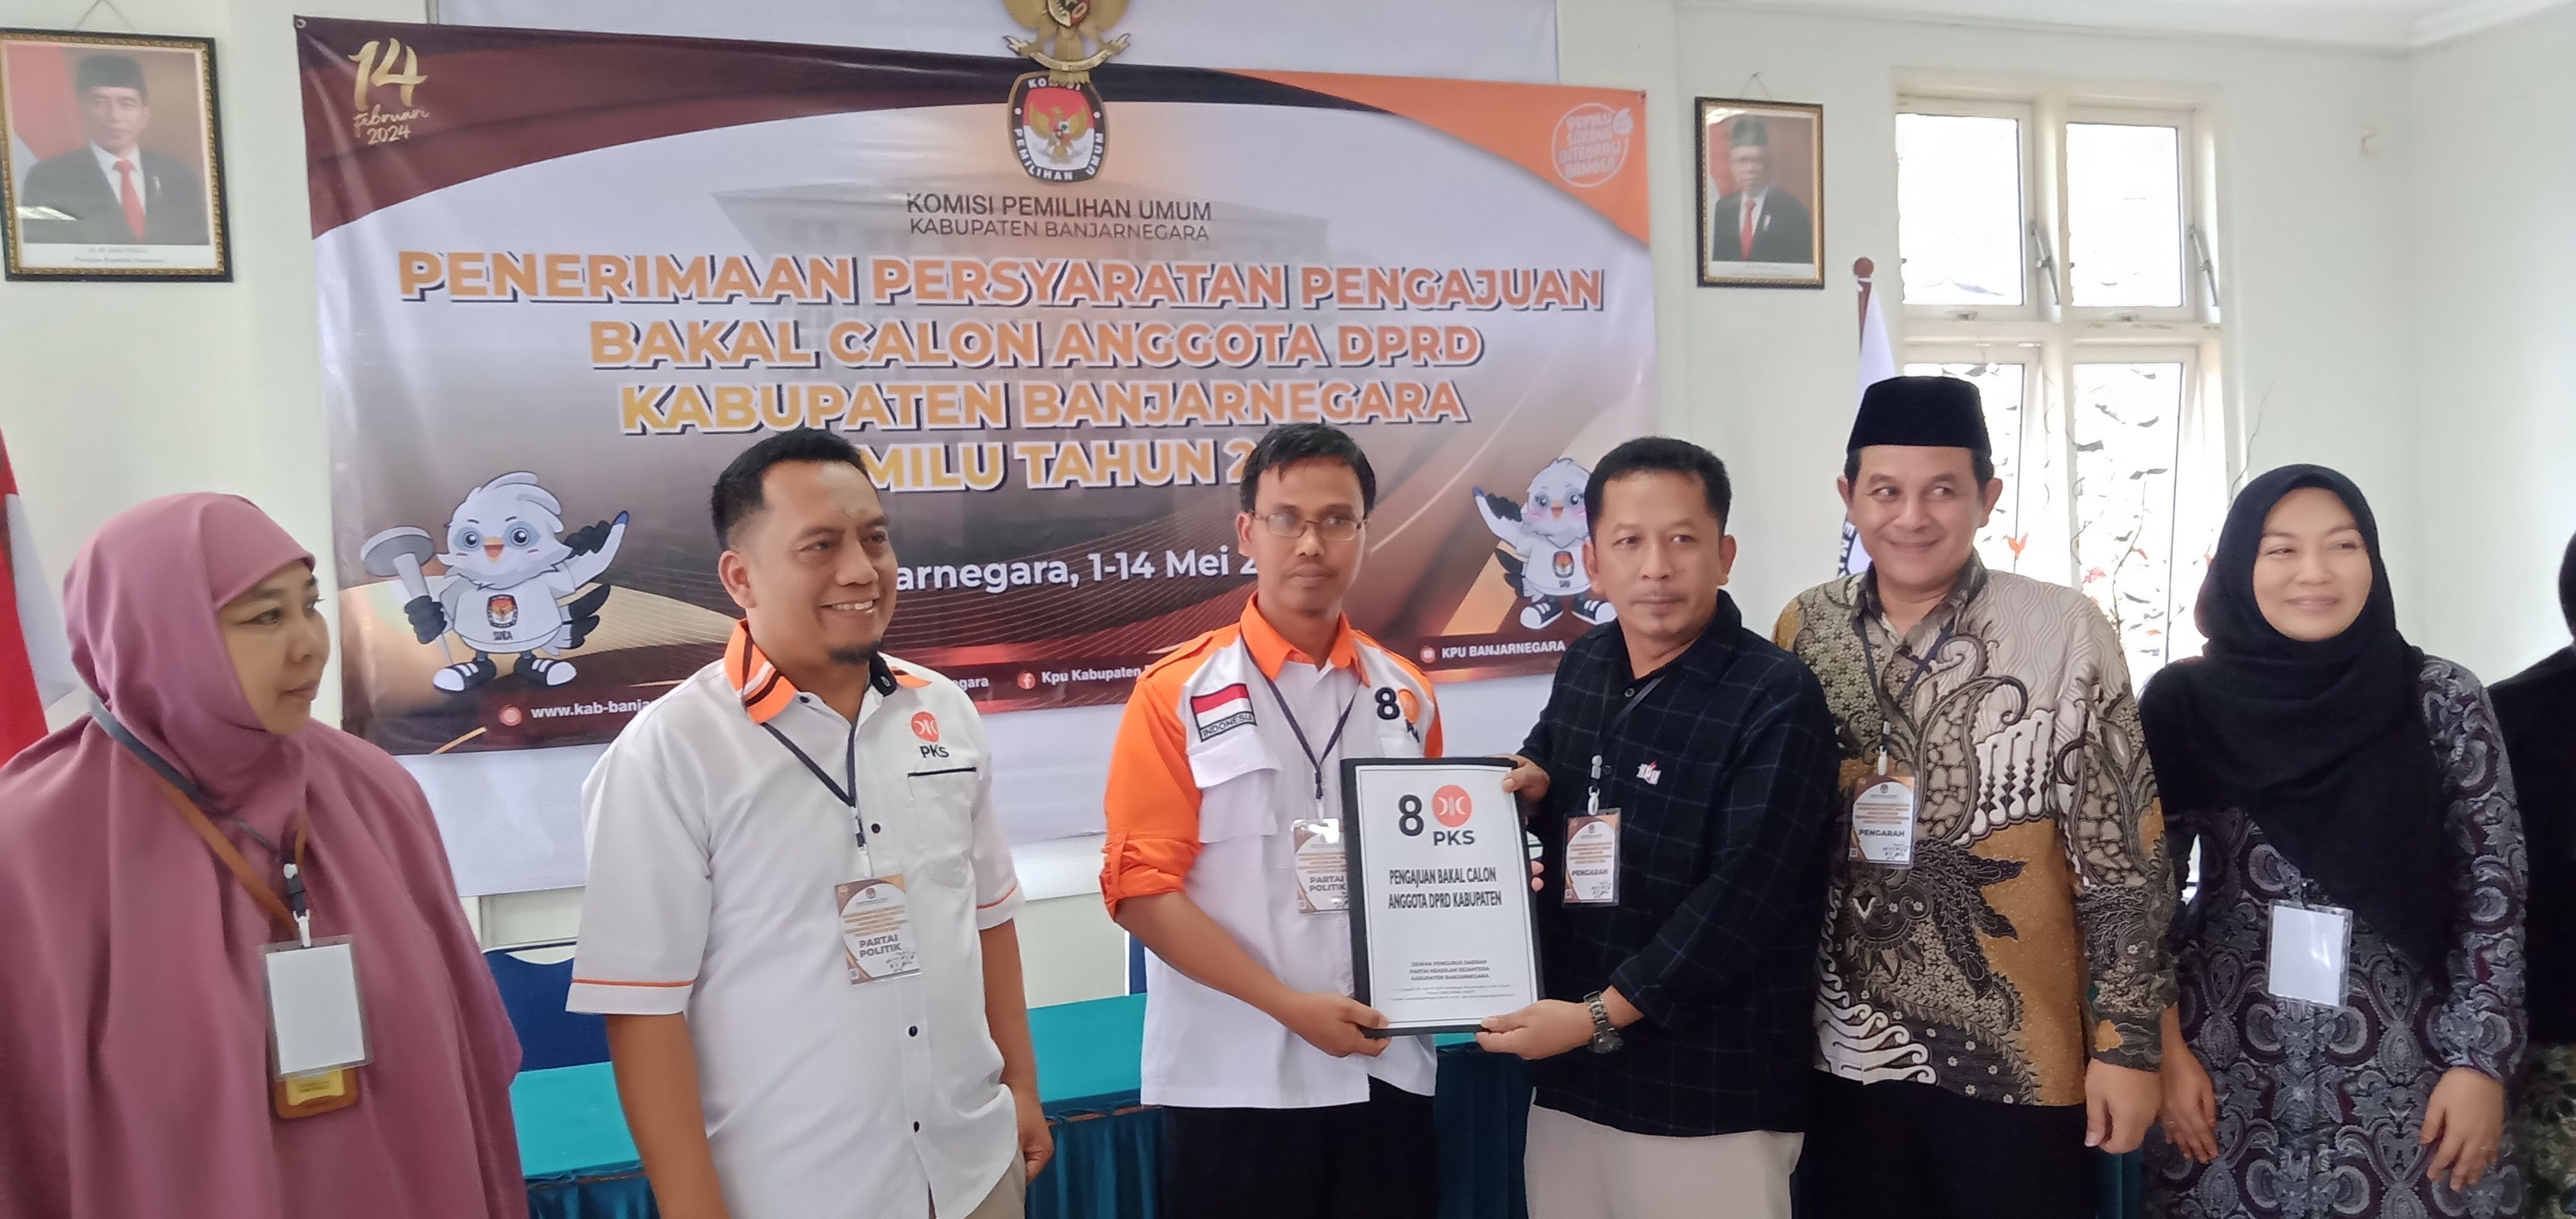 50 bakal calon anggota DPRD  Kabupaten Banjarnegara dari Partai Keadilan Sejahtera menyerahkan berkas pendaftaran ke KPU Kabupaten Banjarnegara pada Senin 8 Mei 2023